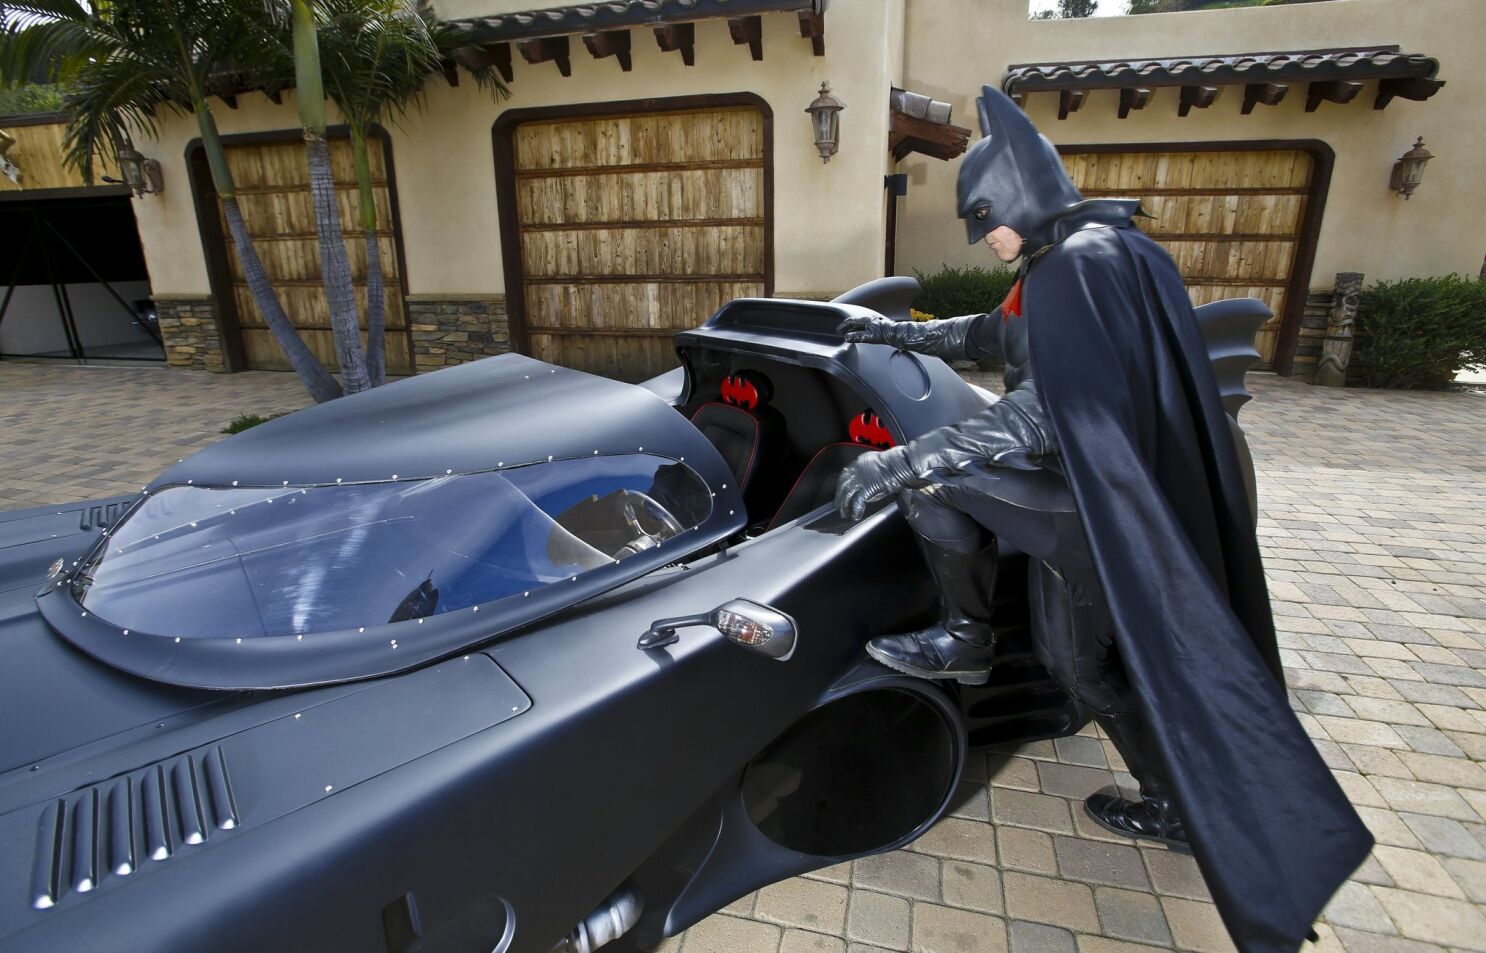 Batman rides again in Valley Center - The San Diego Union-Tribune